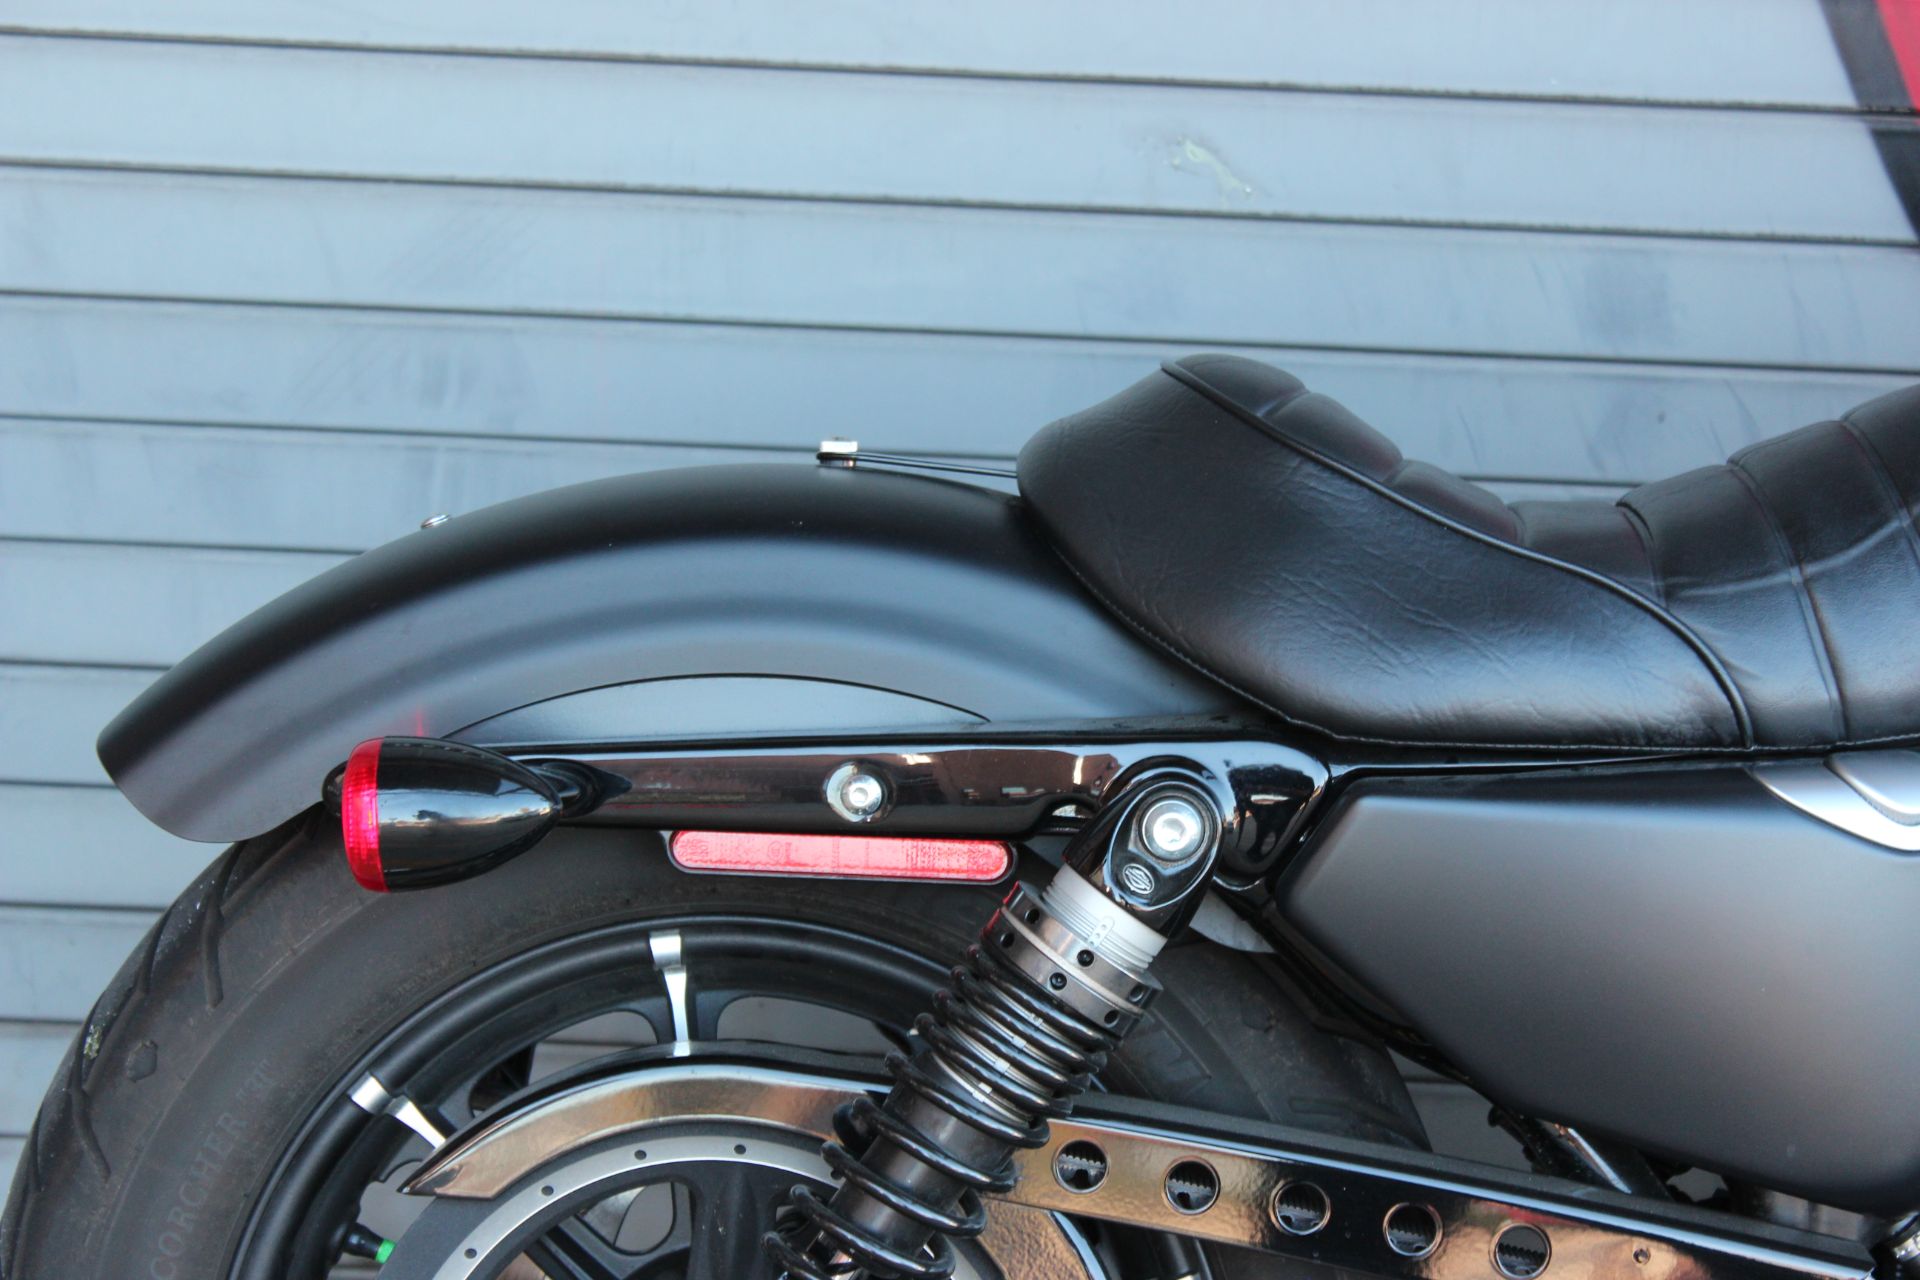 2020 Harley-Davidson Iron 883™ in Carrollton, Texas - Photo 9